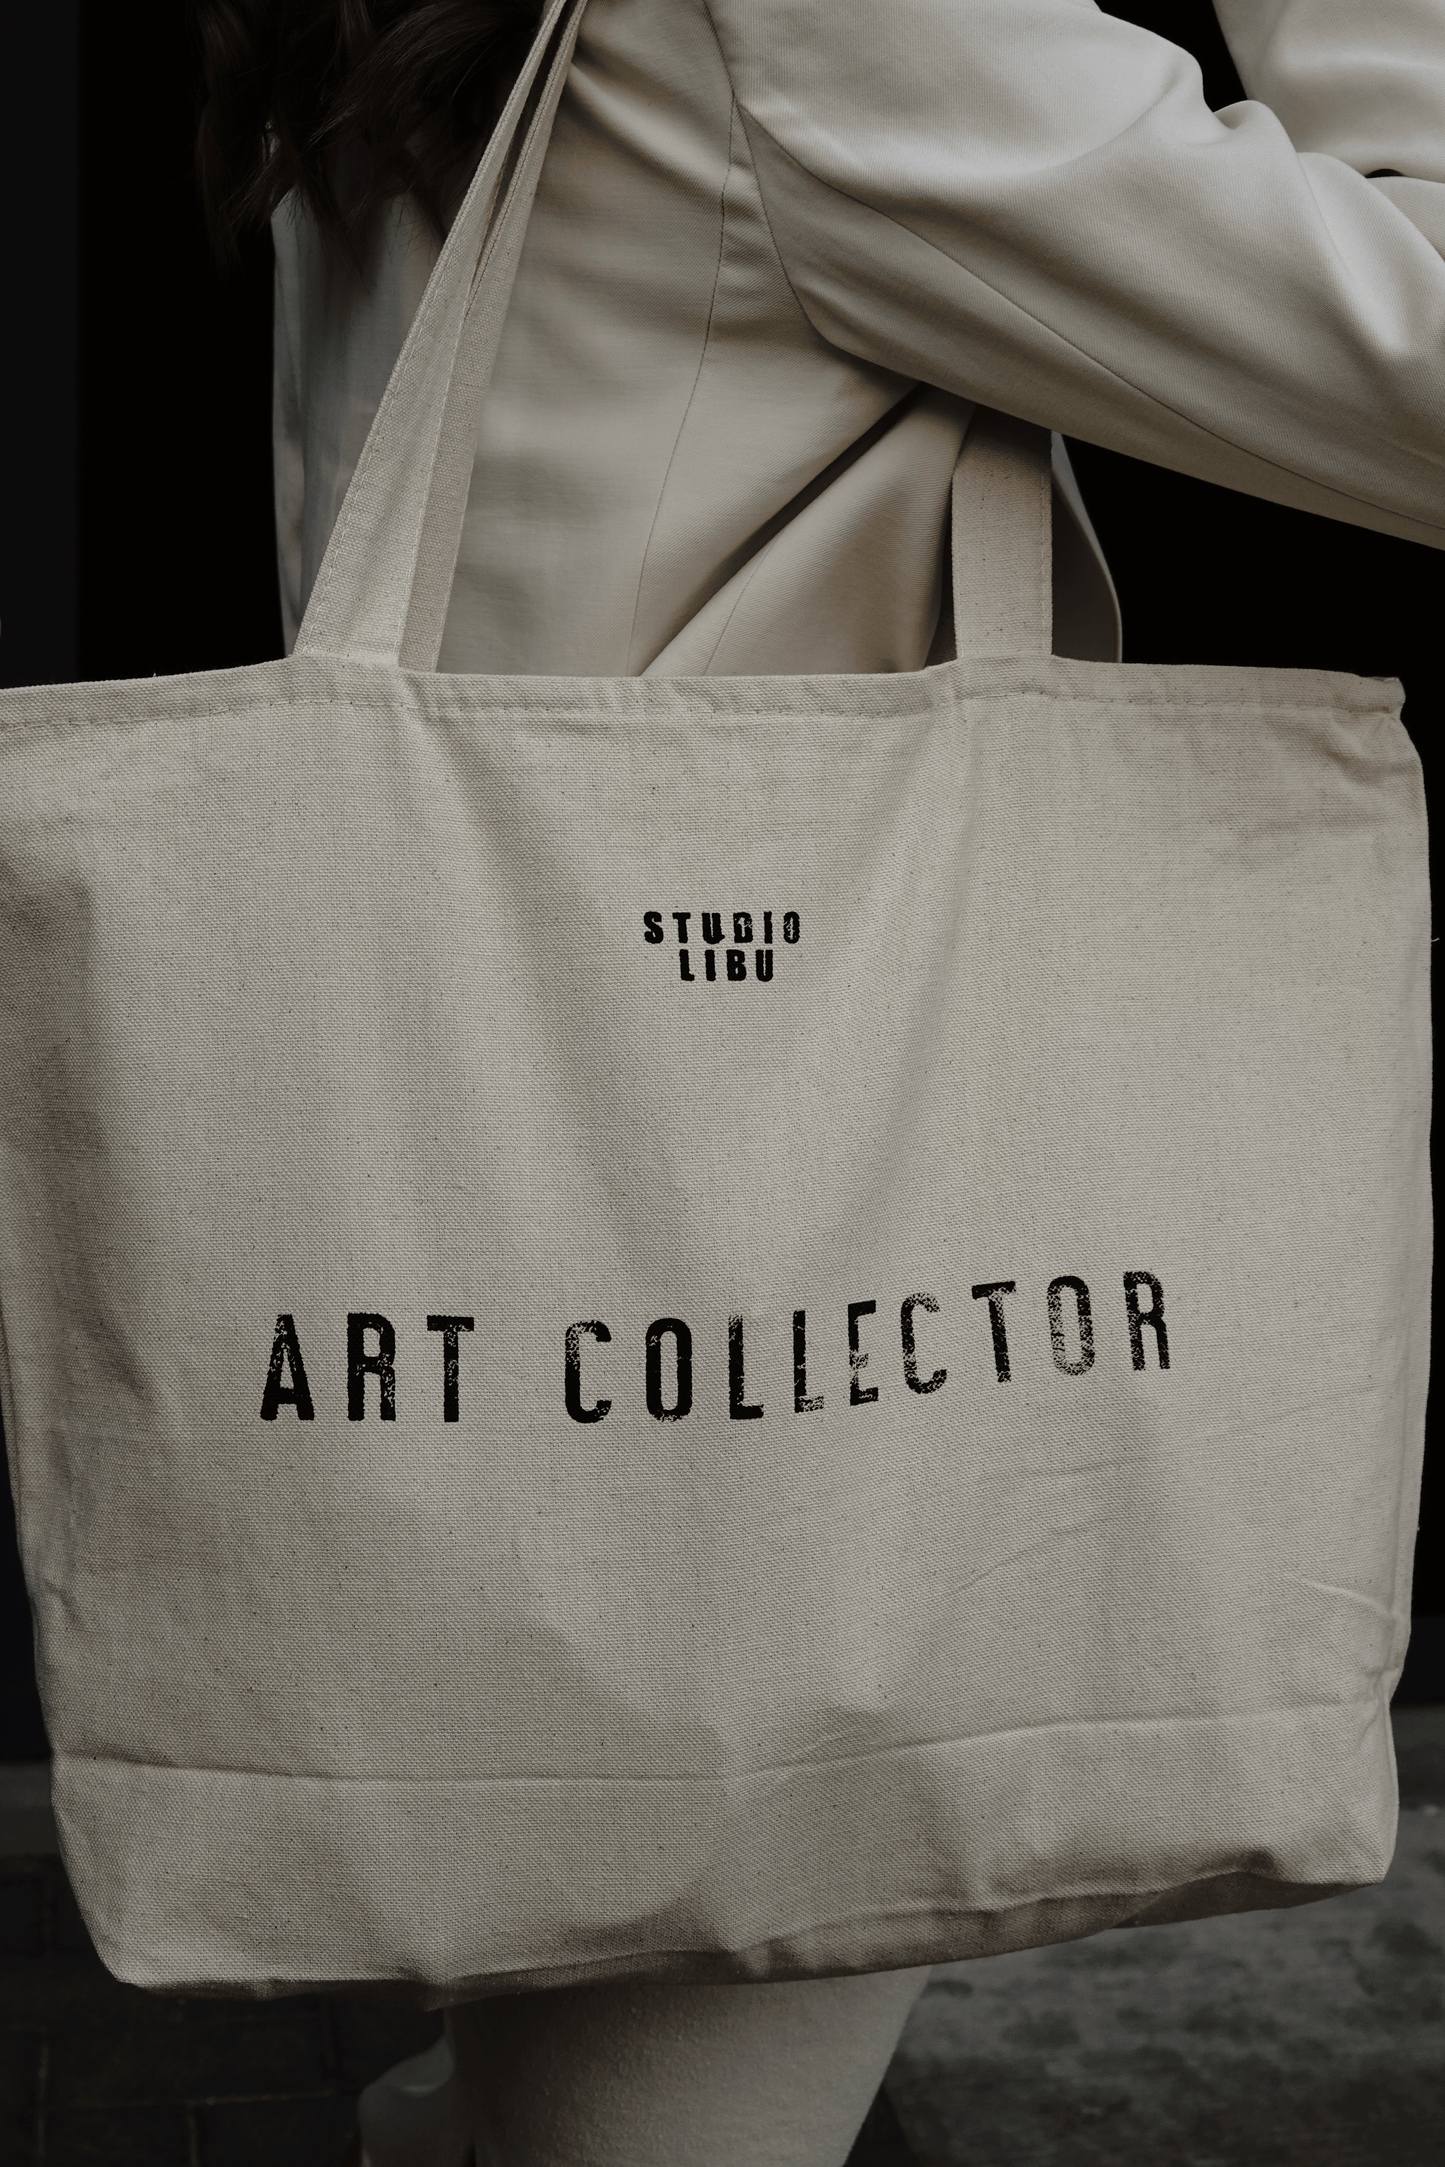 Art collector tote by studio libu